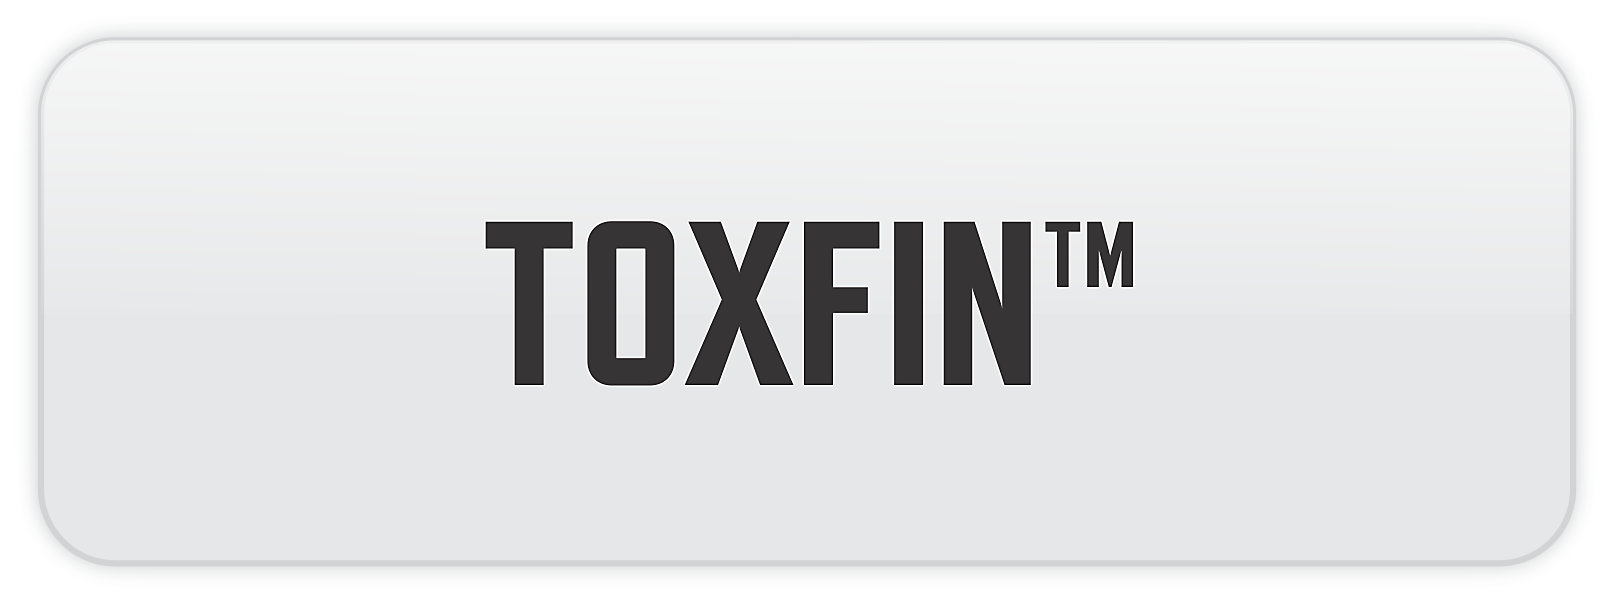 TOXFIN™